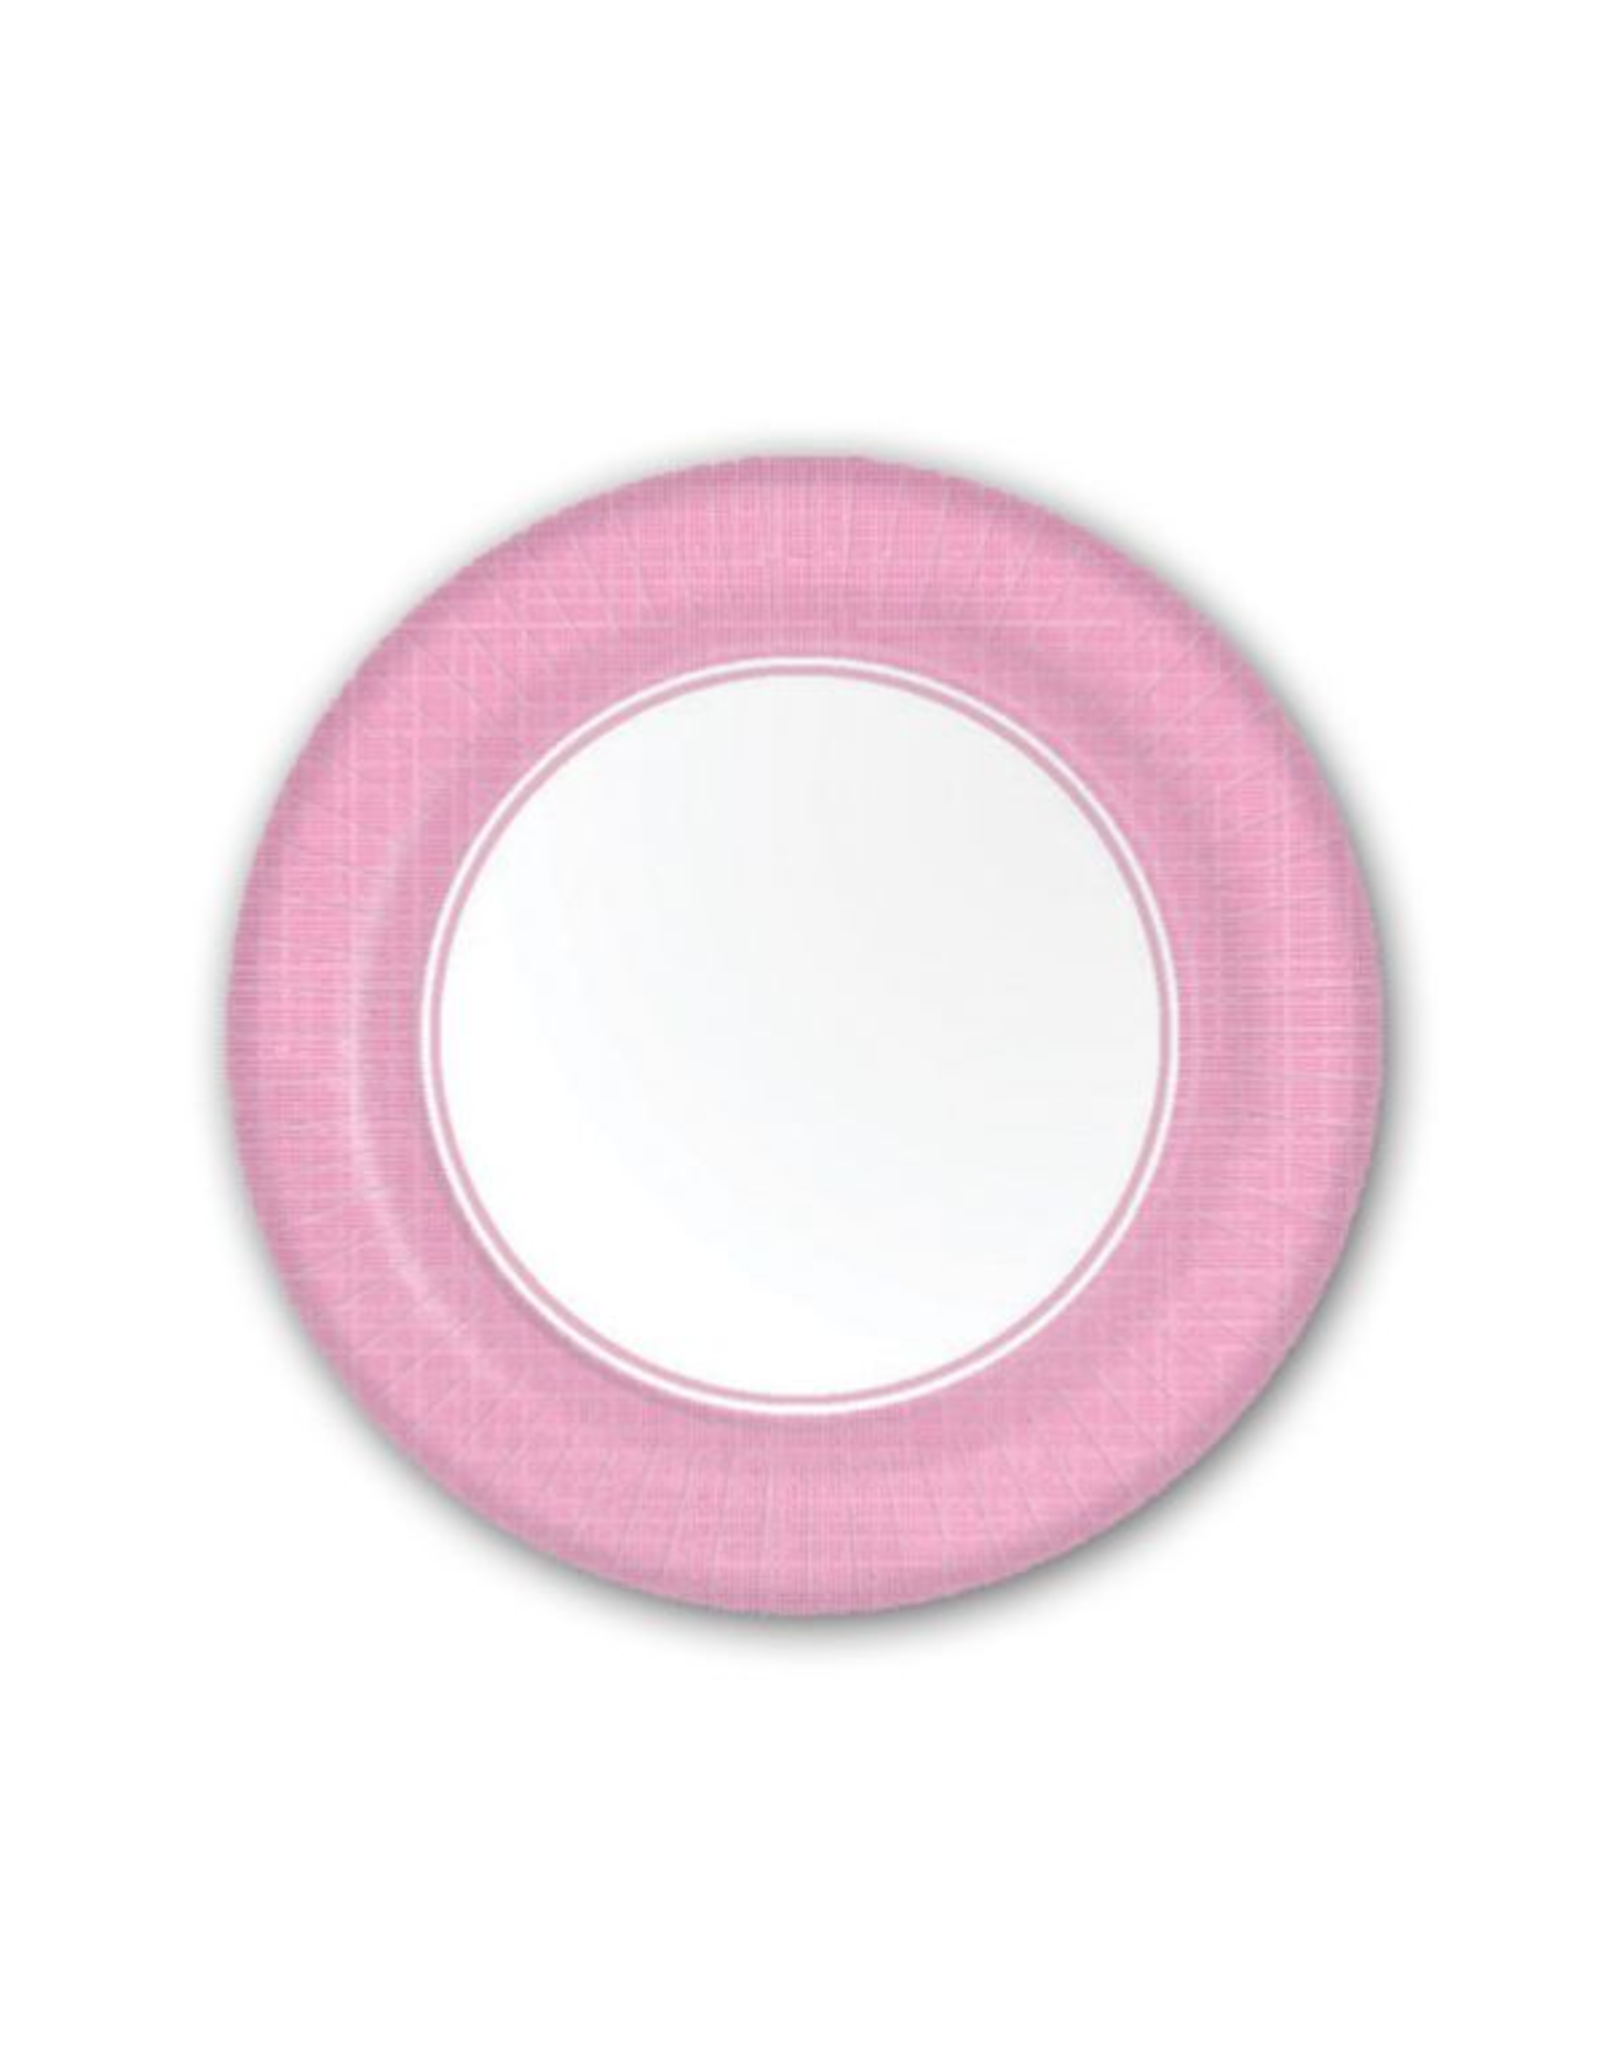 PPD Paper Product Design Paper Plates 87169 Mixx Pink Dessert/Salad